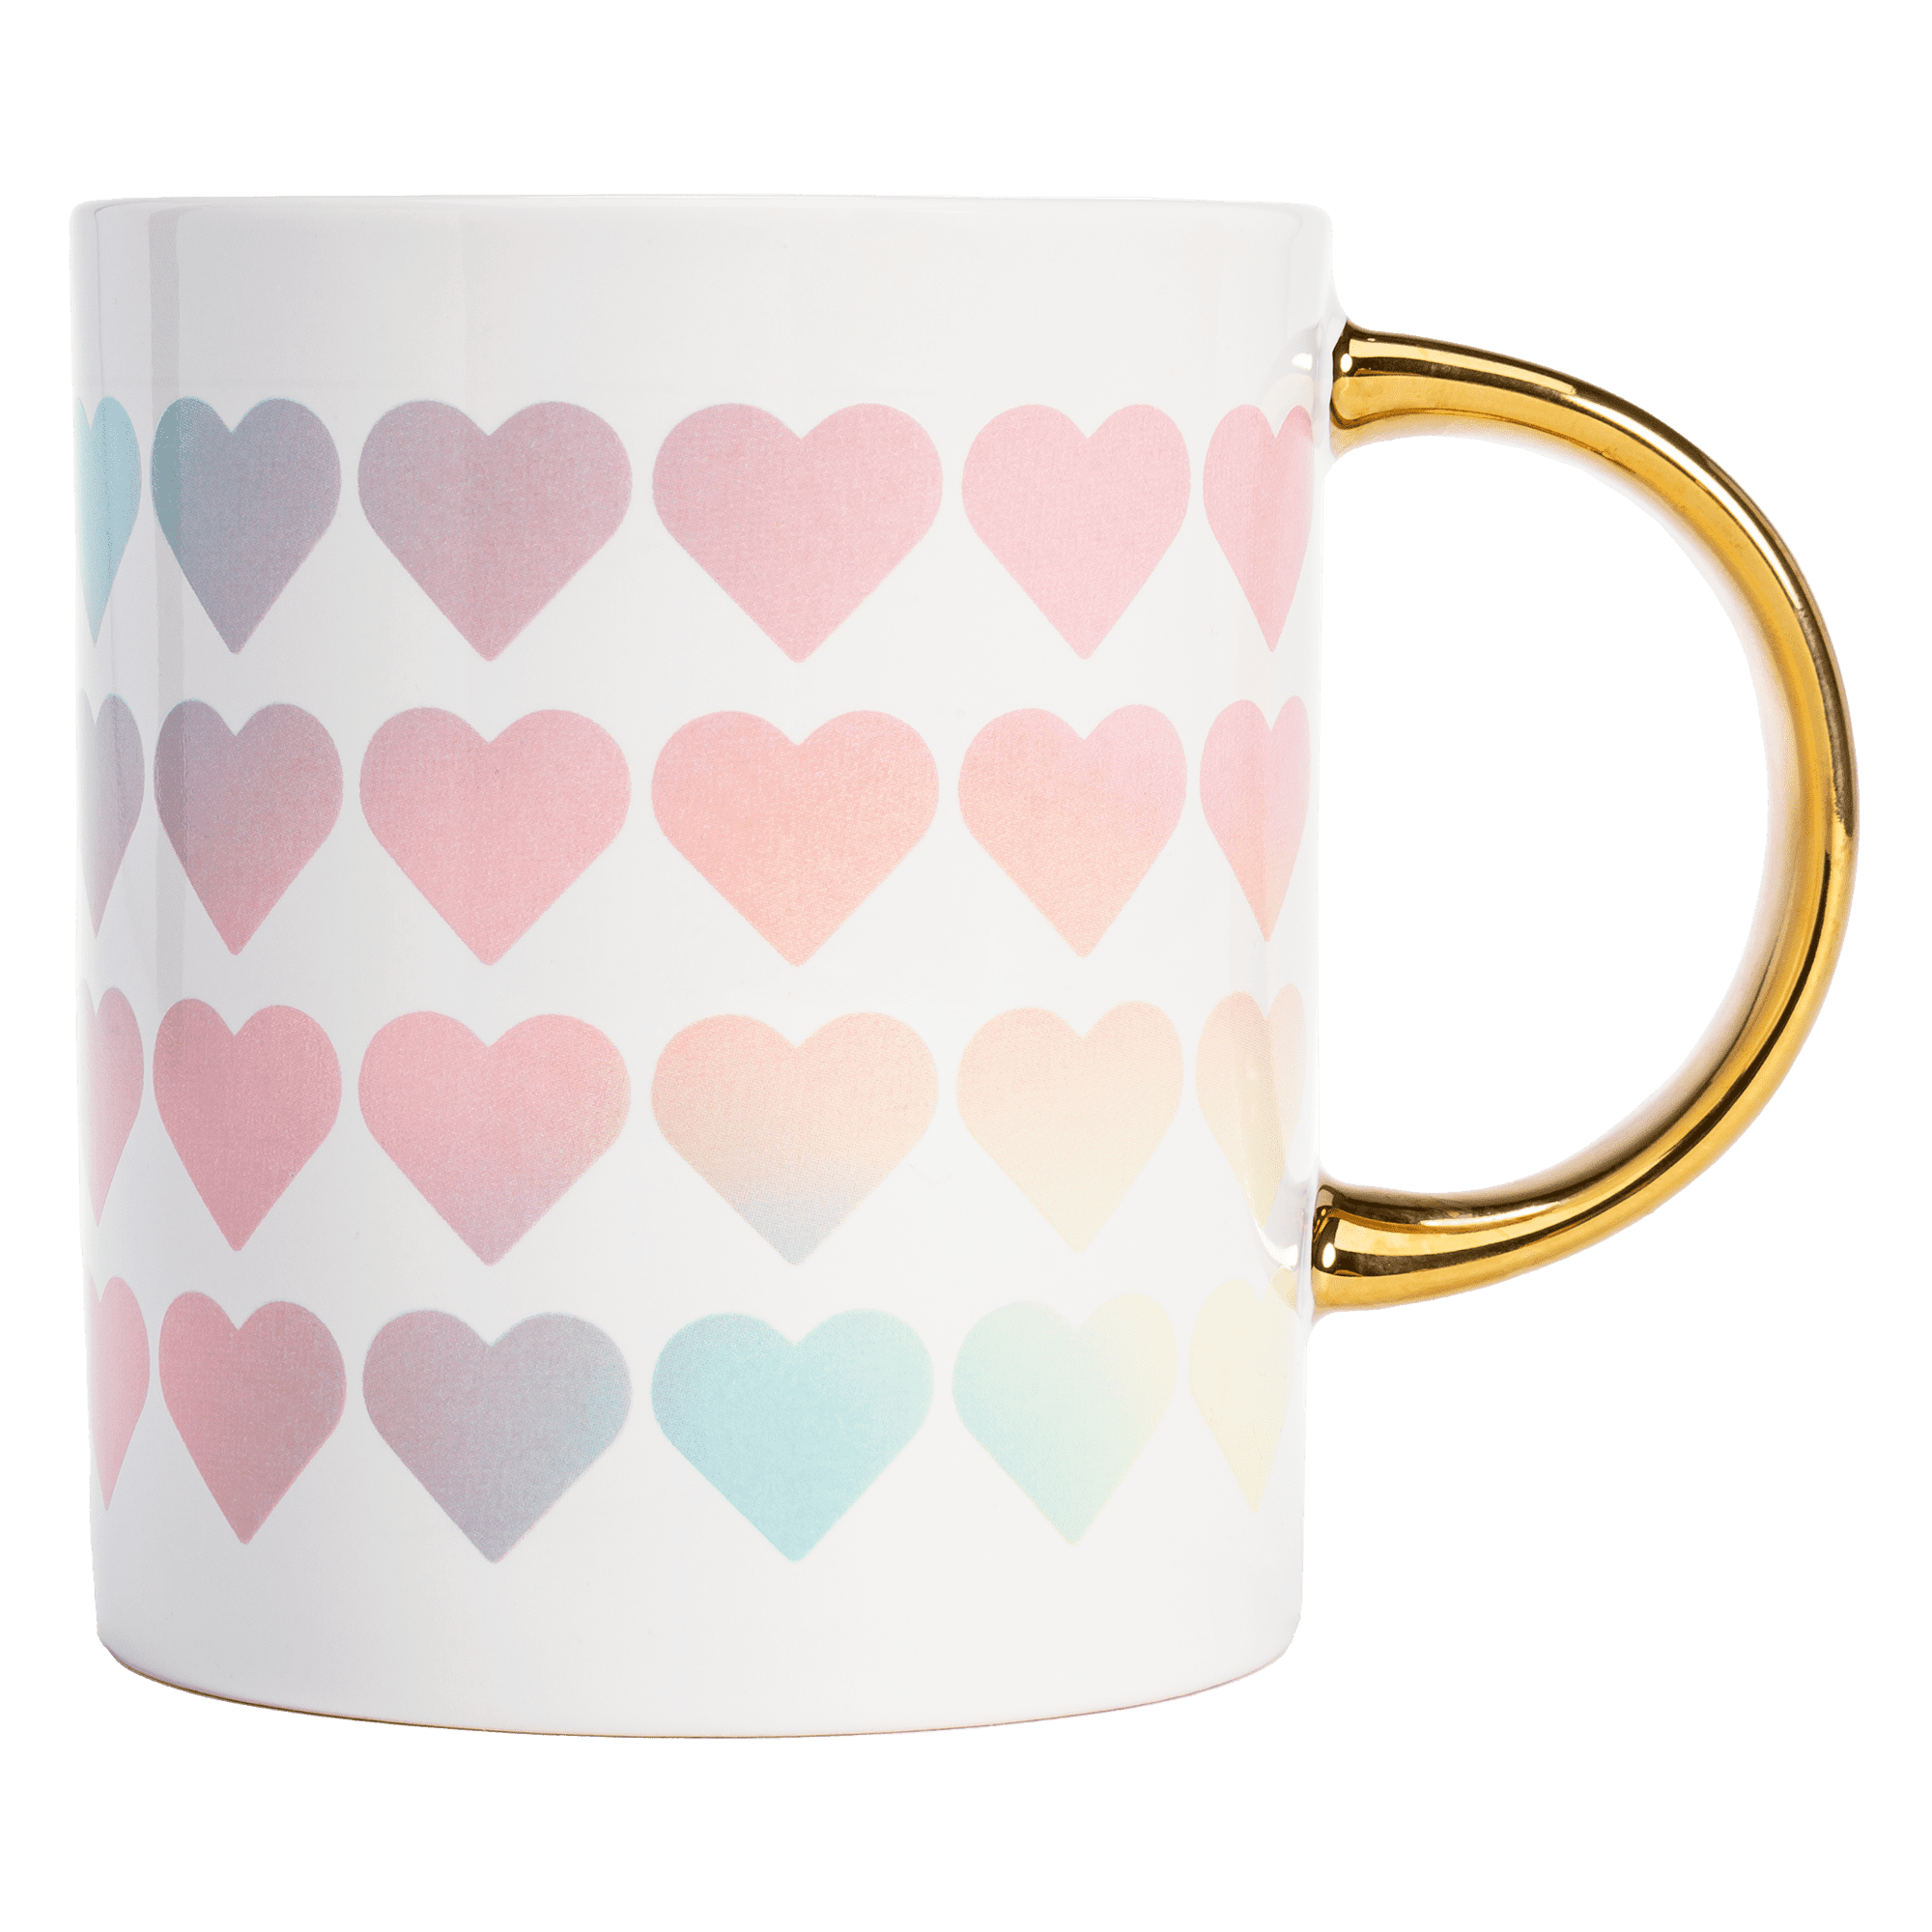 Paris Hilton Ceramic Coffee Mug, Large Coffee Cup with Gold Handle, 16  Ounces, Rainbow Hearts